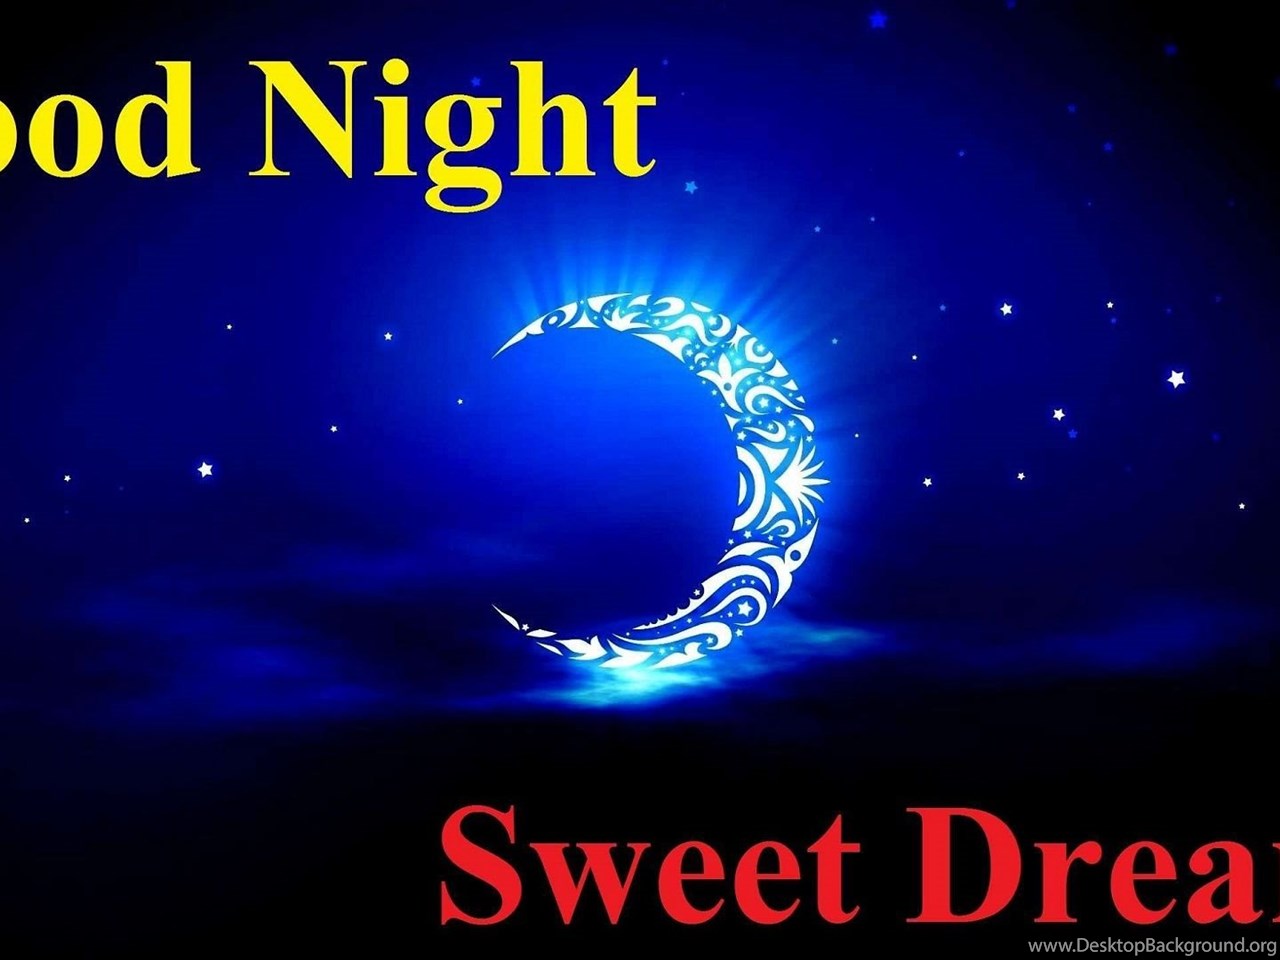 Download Good Night Sweet Dreams Wishes Wallpapers Fullscreen Standart 4:3 ...